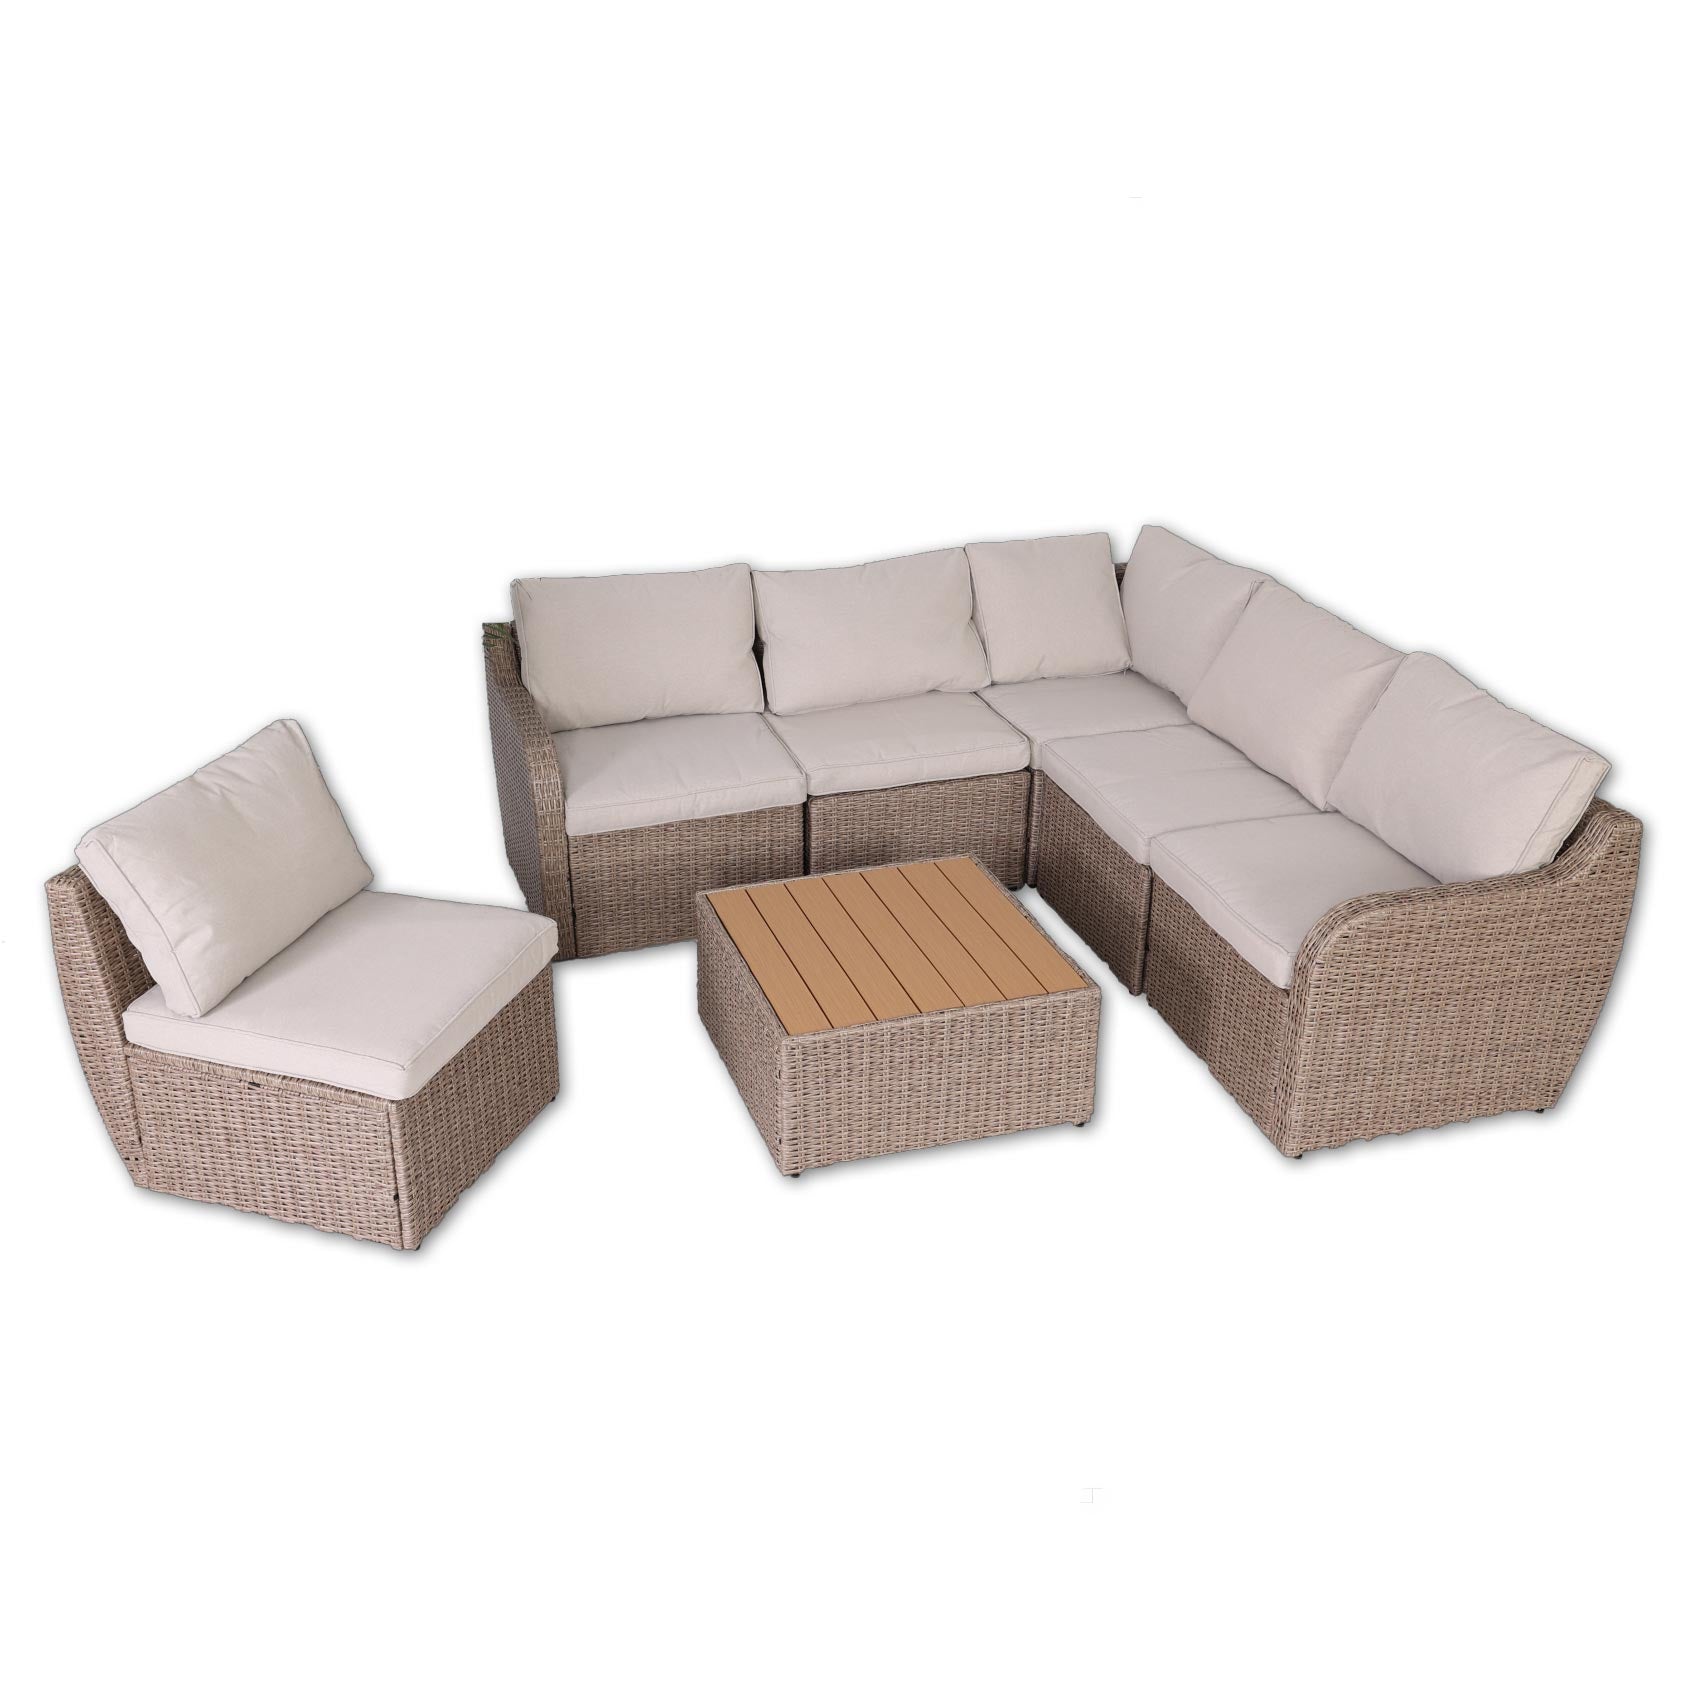 Homrest 7 pieces patio furniture set, outdoor conversation set, khaki